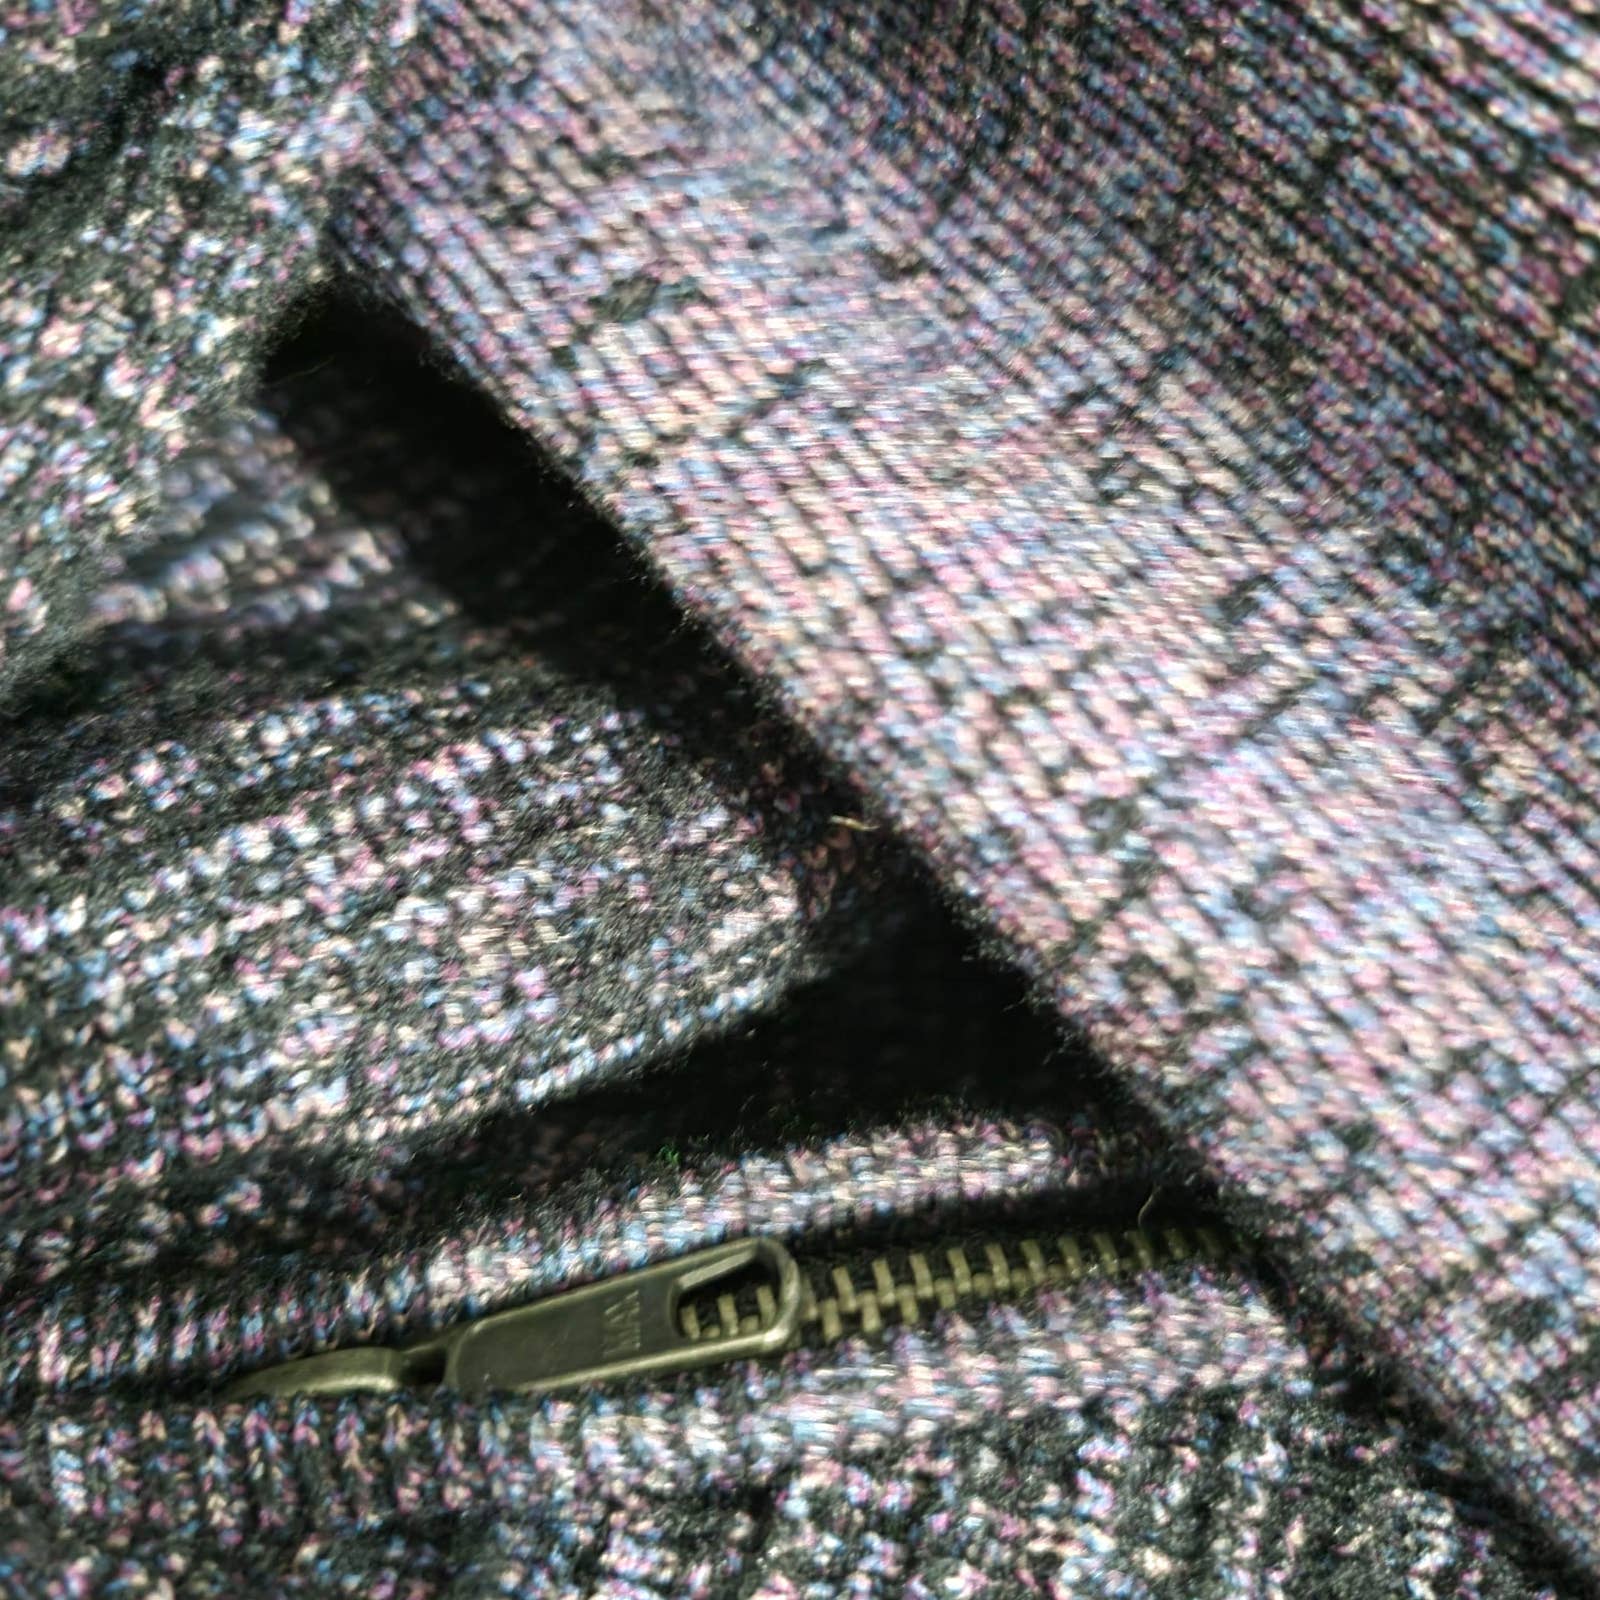 Free People Naomi Swit Jacket Purple Sweater Textured Knit Bomber Size Medium